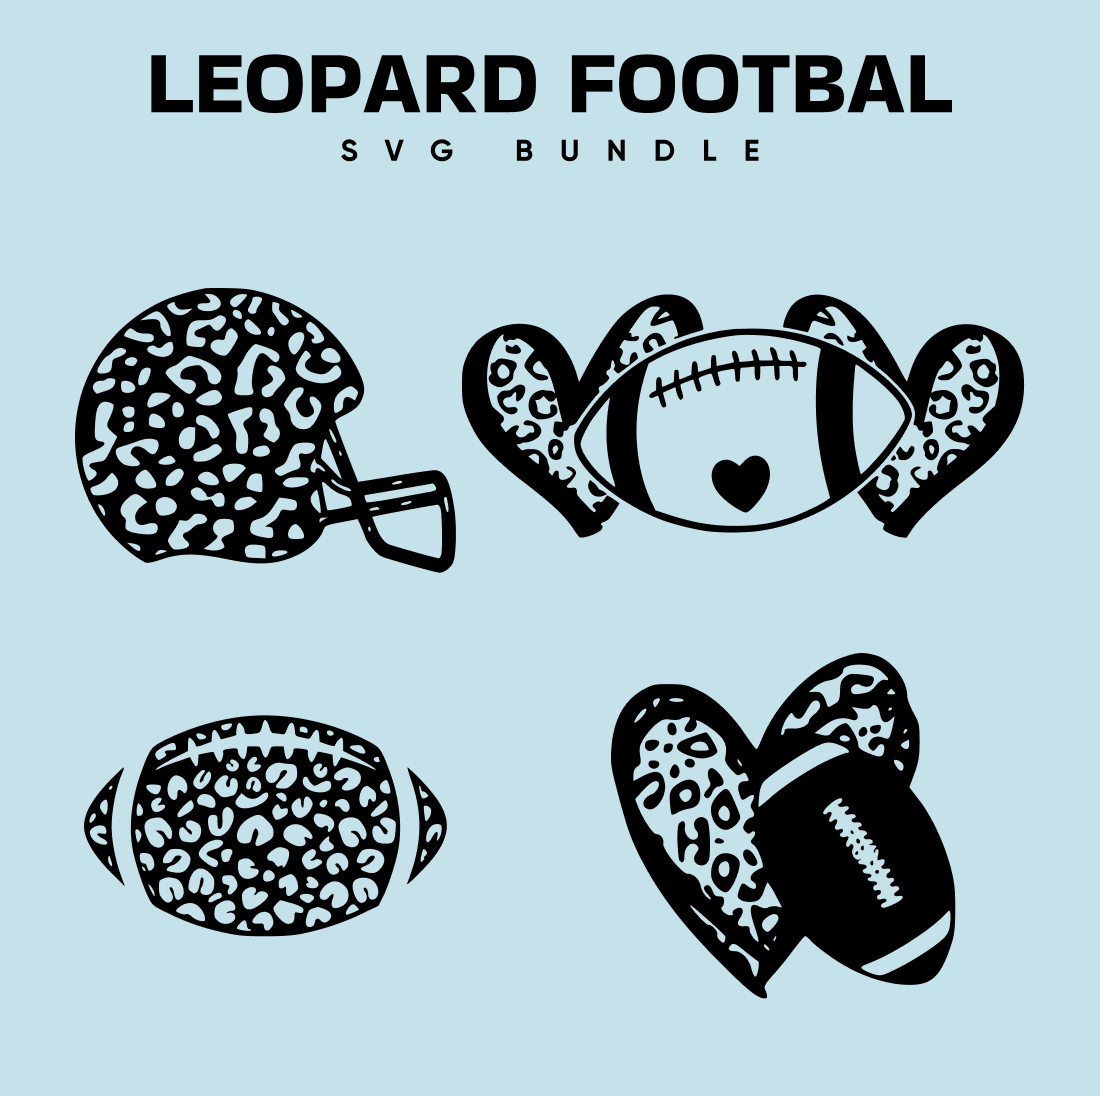 The leopard football svg bundle.